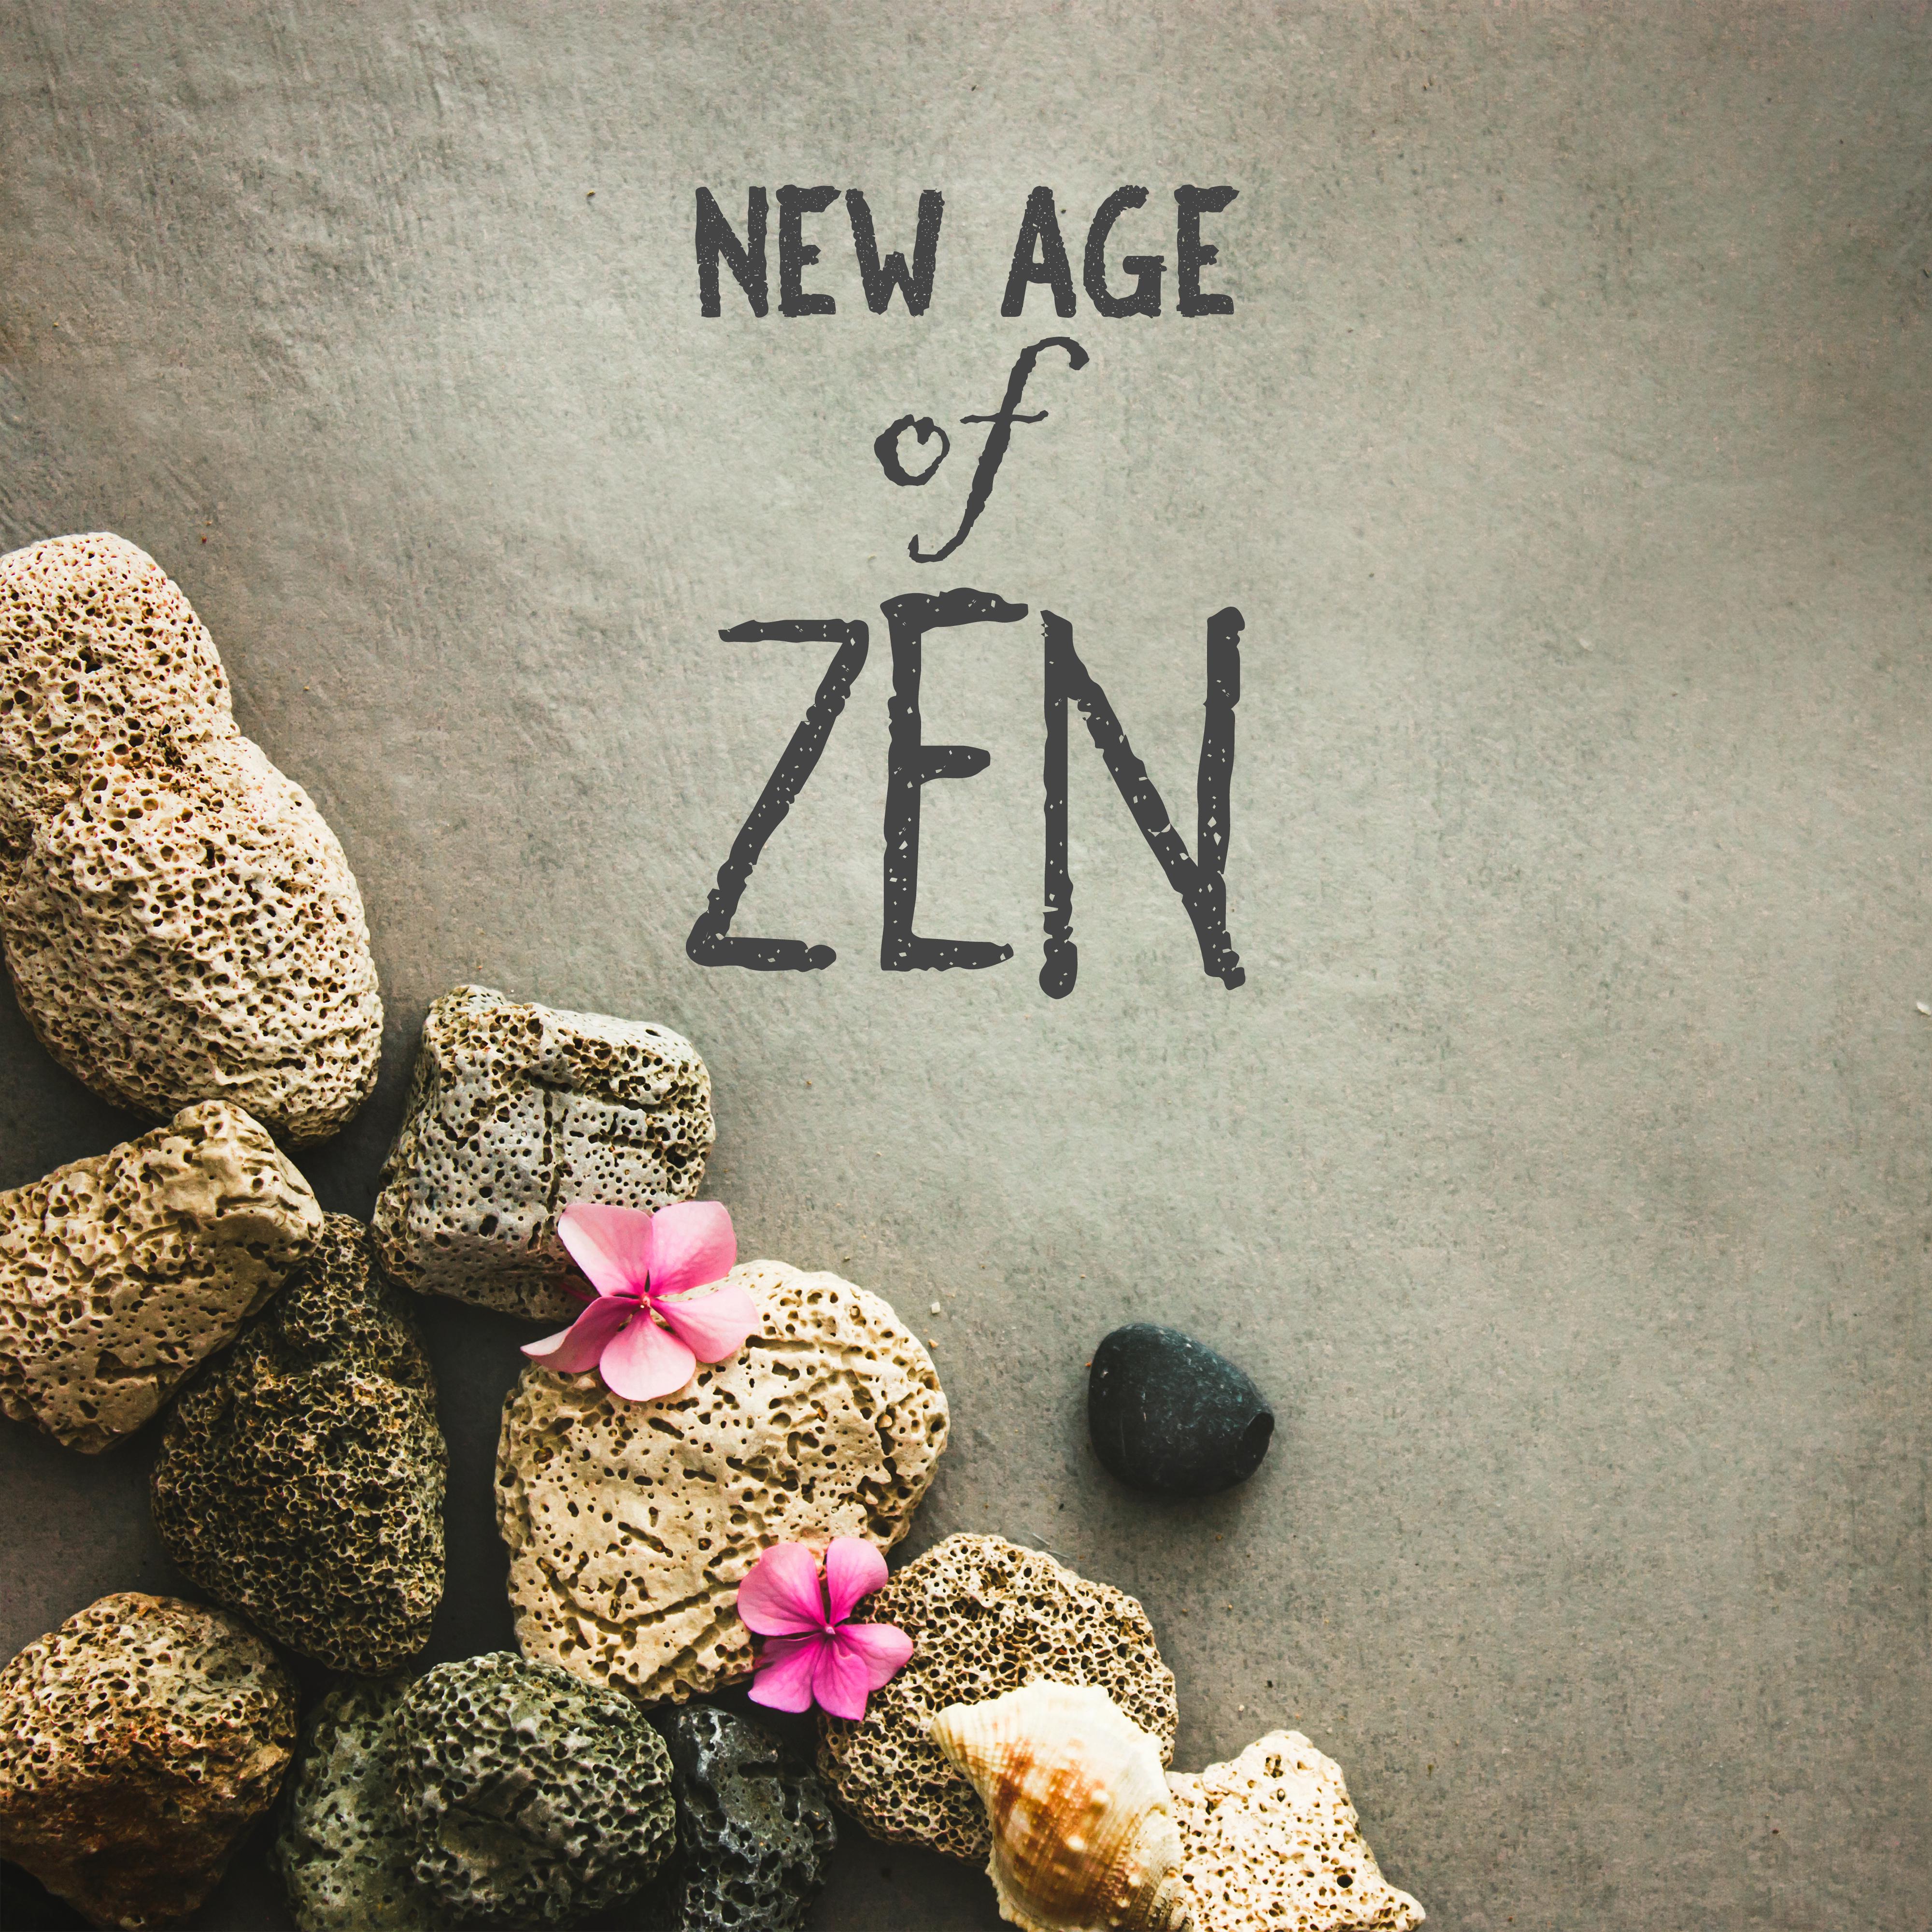 New Age of Zen: Music for Meditation, Spa, Yoga, Massage, Rest or Sleep